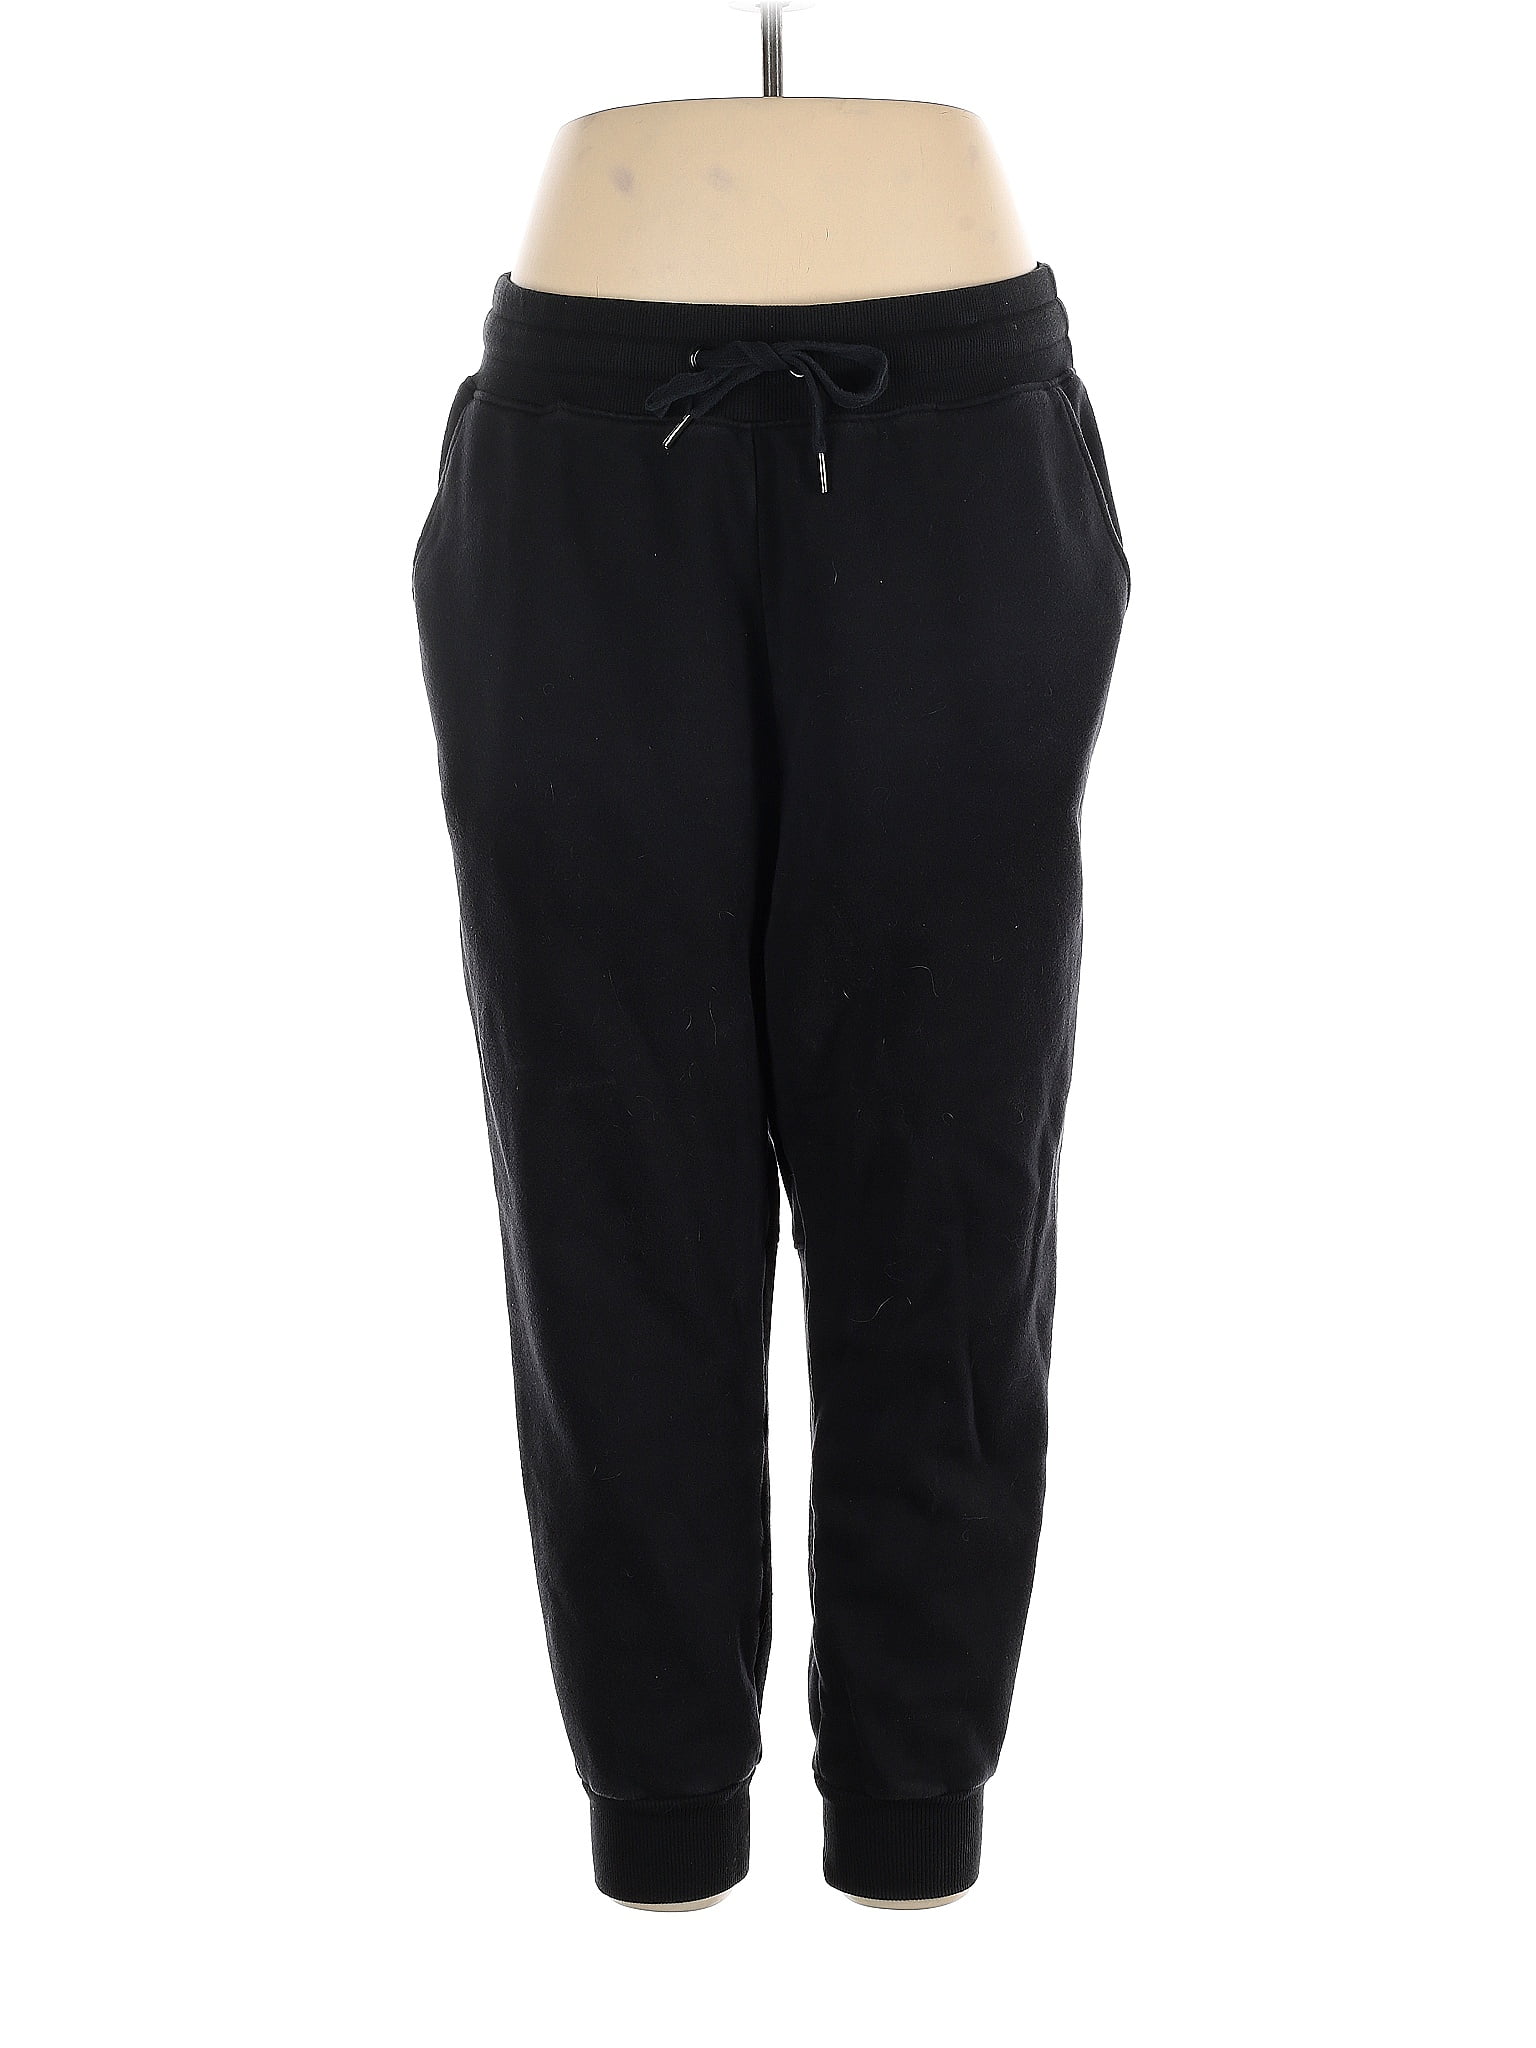 Zella Black Active Pants Size 1X (Plus) - 57% off | thredUP